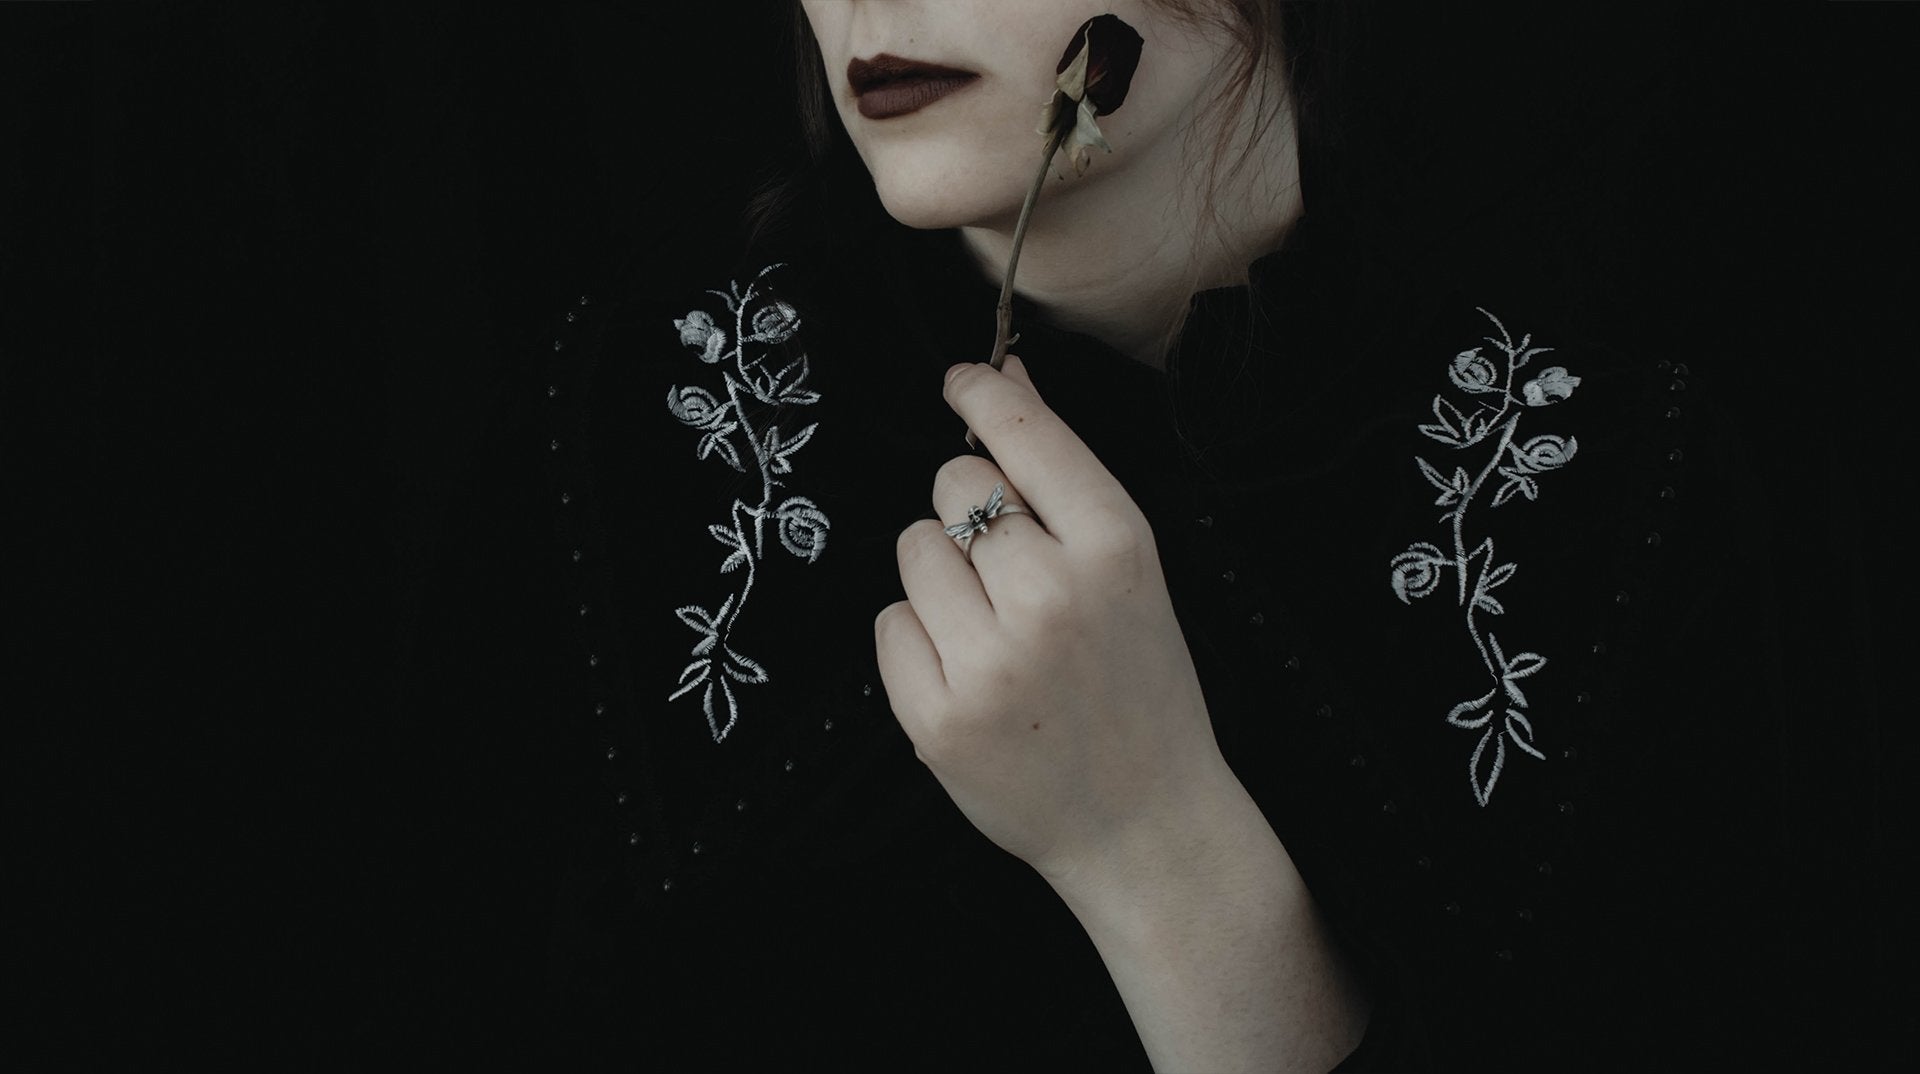 dark_aesthetic_woman_in_black_holding_flower_-Faq